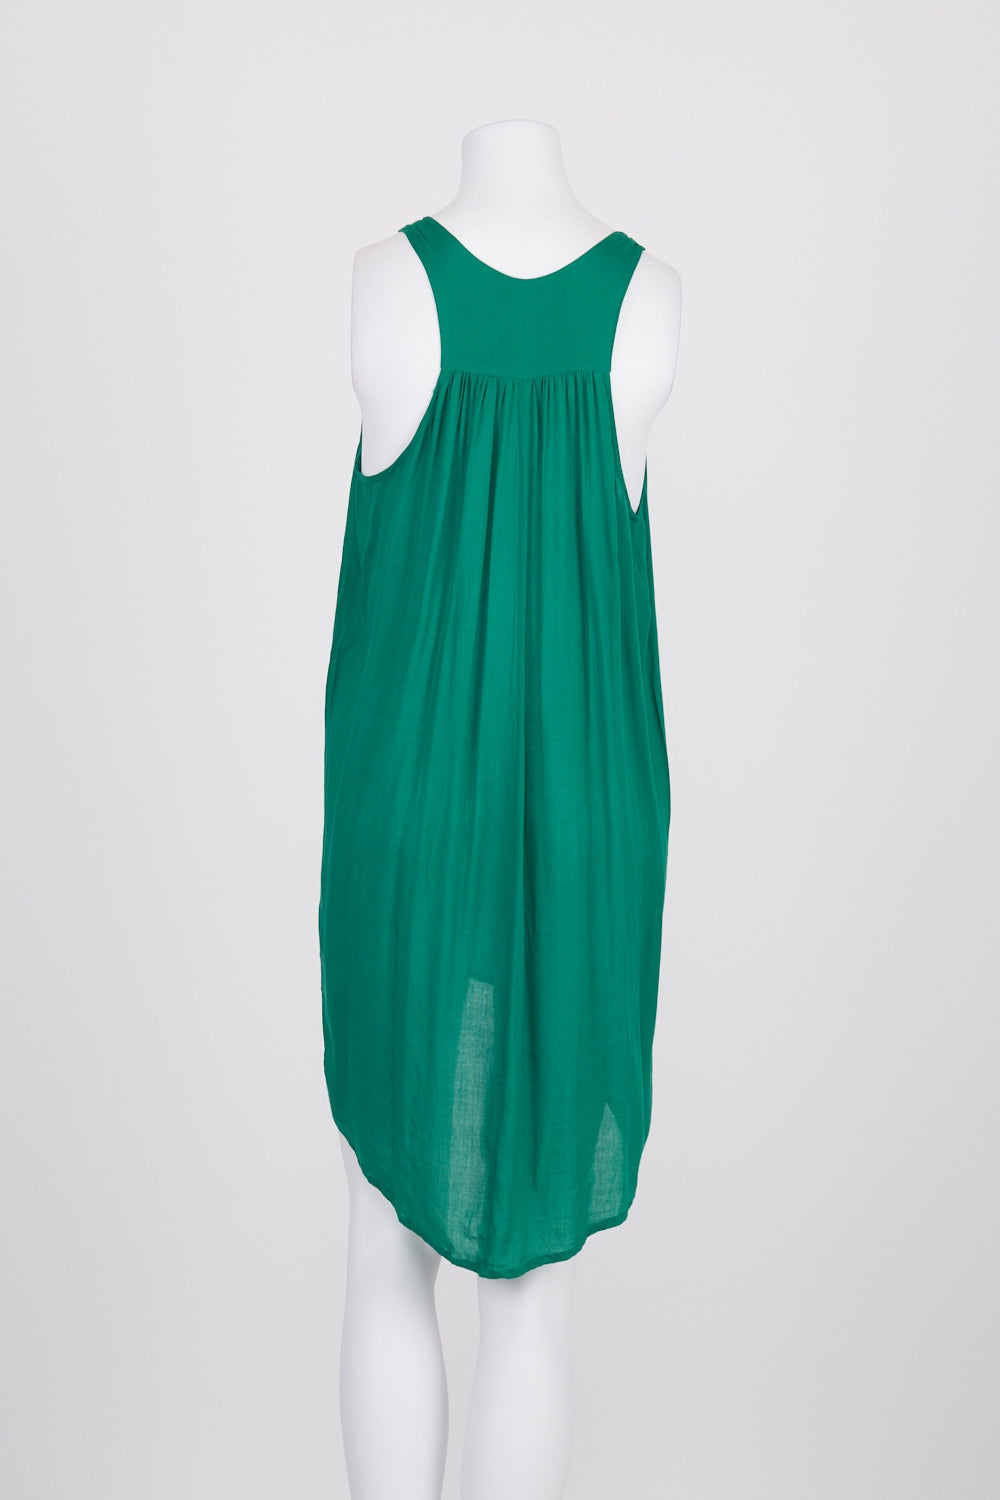 Uma And Leopold Green Bead Detail Dress S